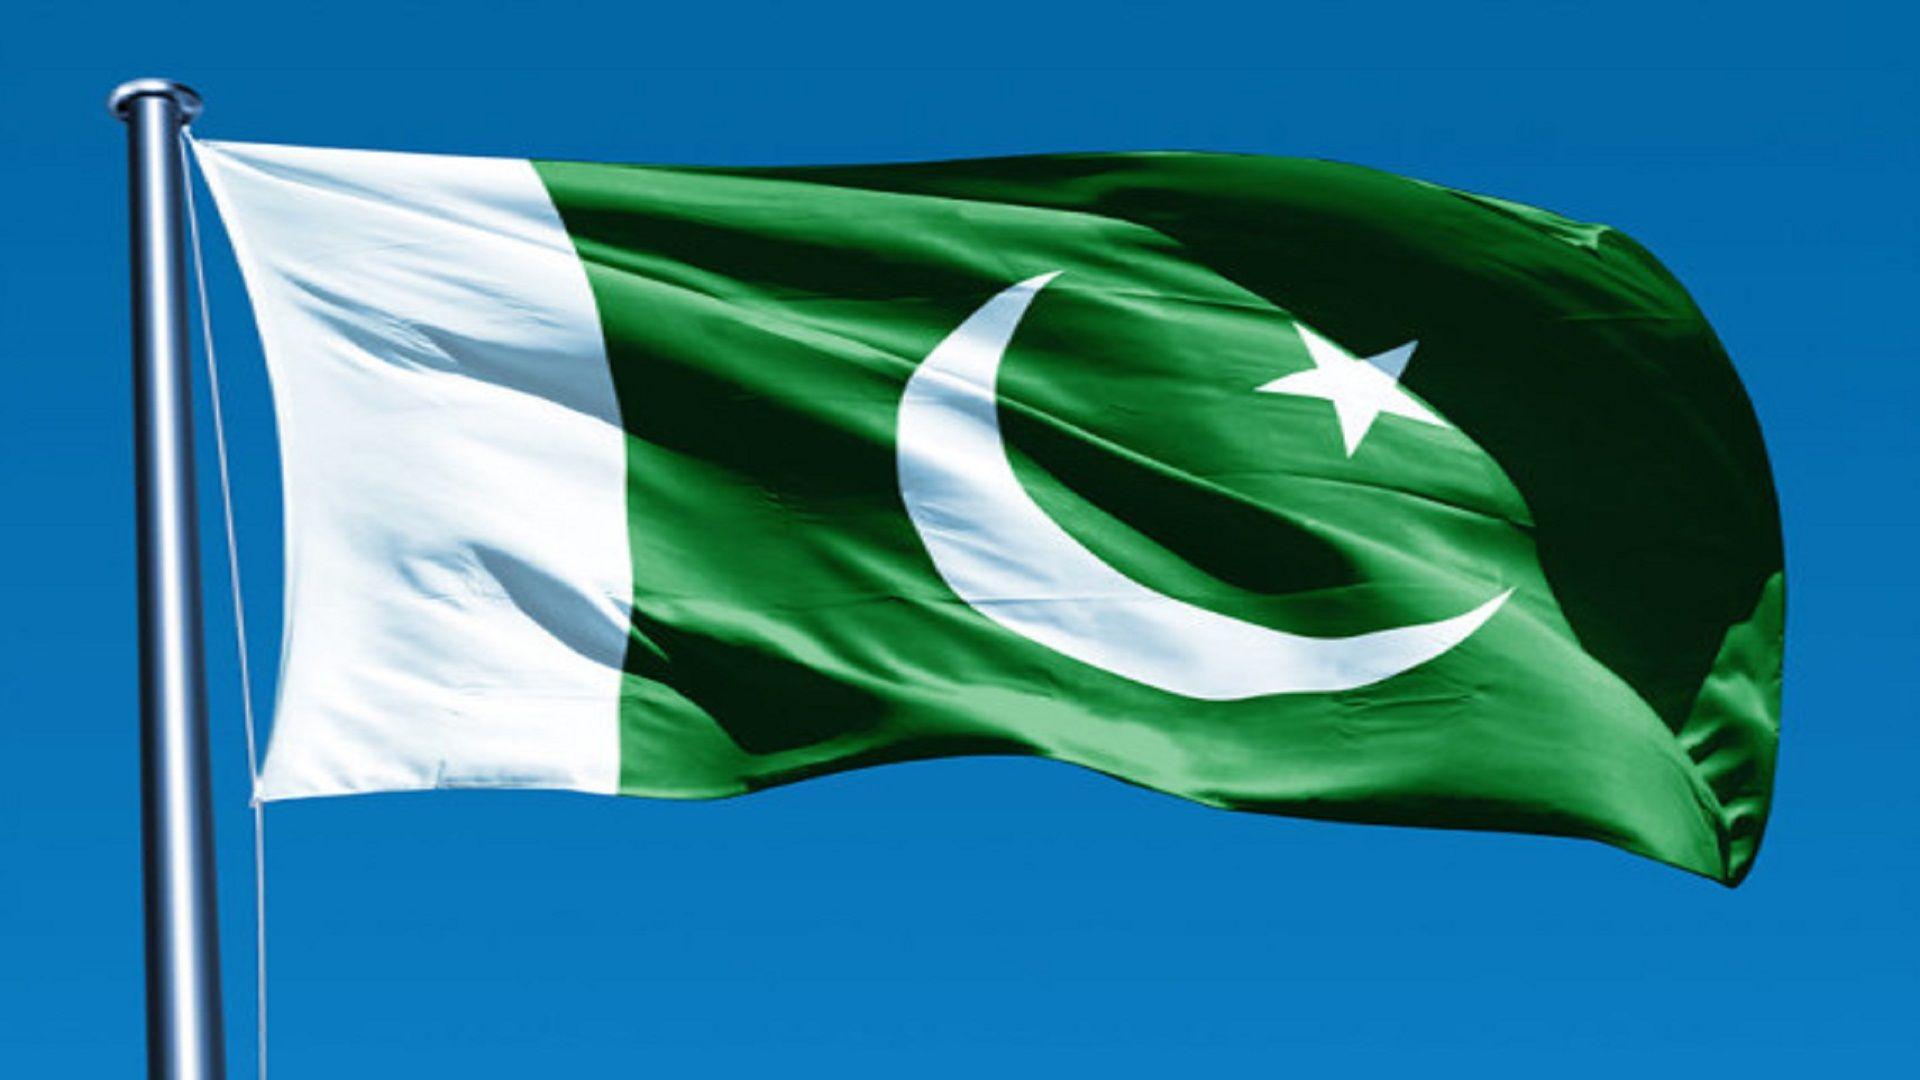 Pakistan Flag Wallpaper HD 2015. Pakistan flag, Pakistan flag image, Pakistani flag